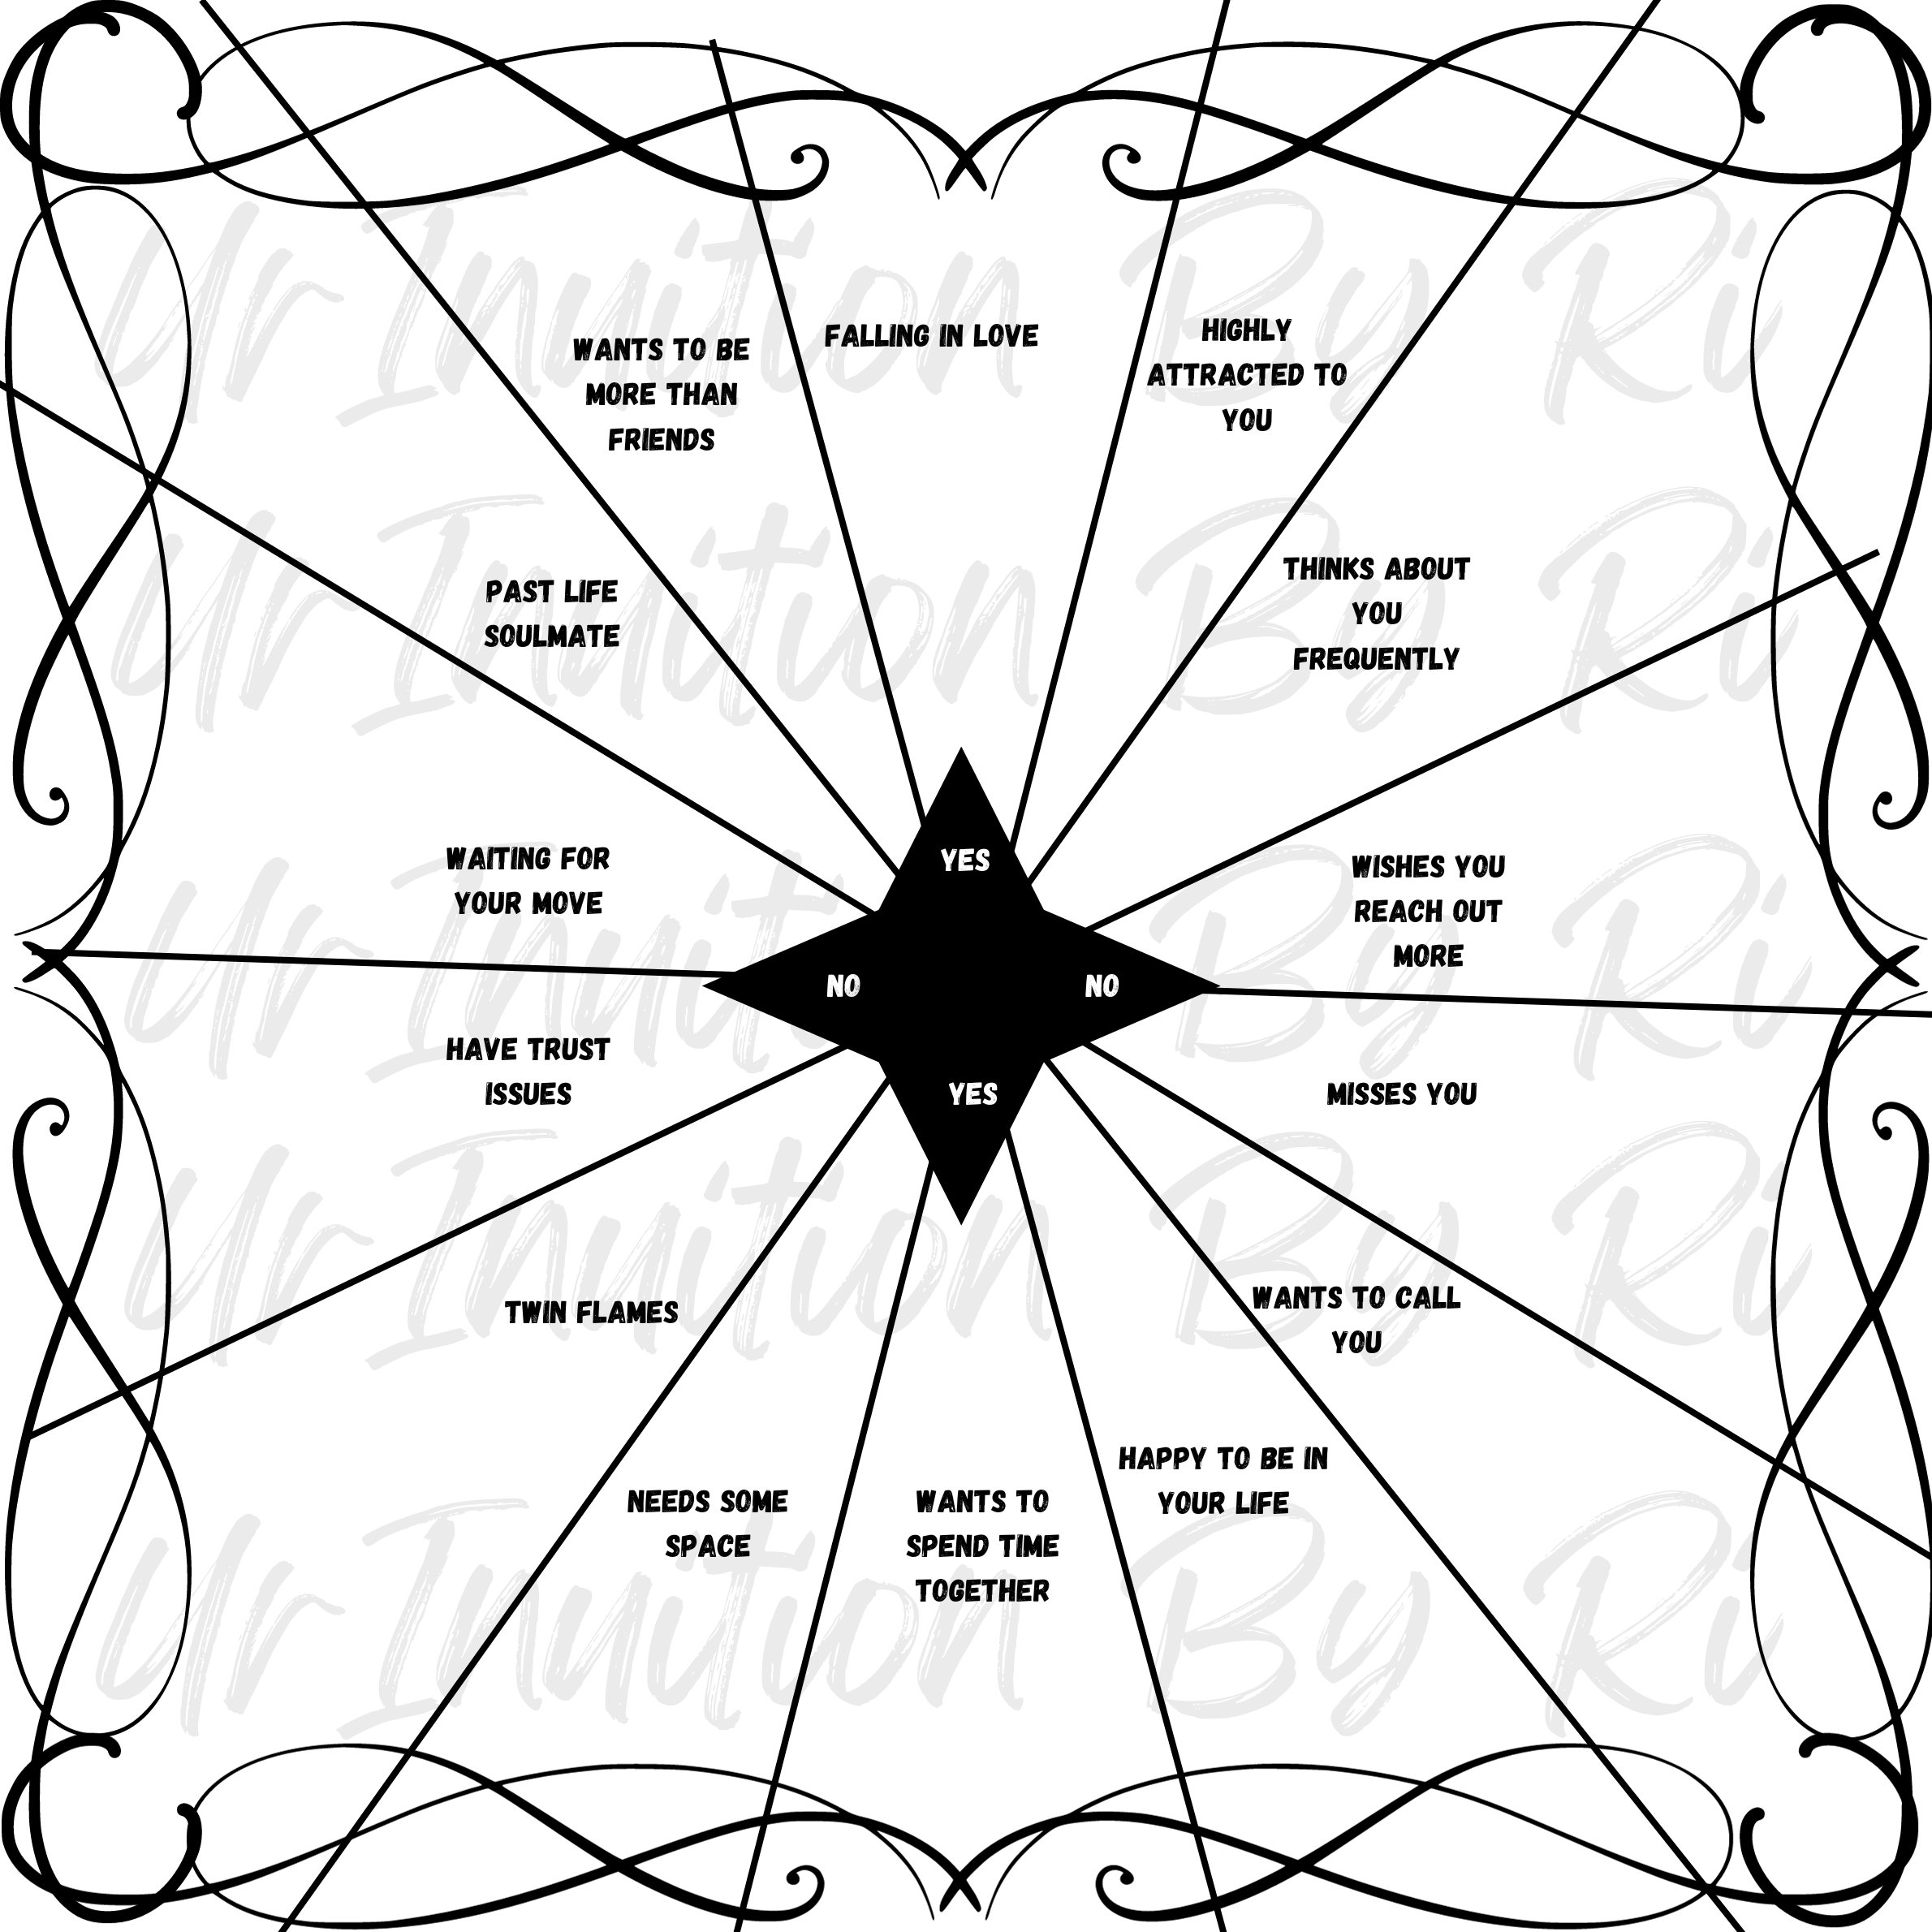 Bovis Scale Chakra Gland, Aura 's Purity Percentage Sacred Rays Pendulum  Dowsing Chart Printable Dowsing Board for Divination 